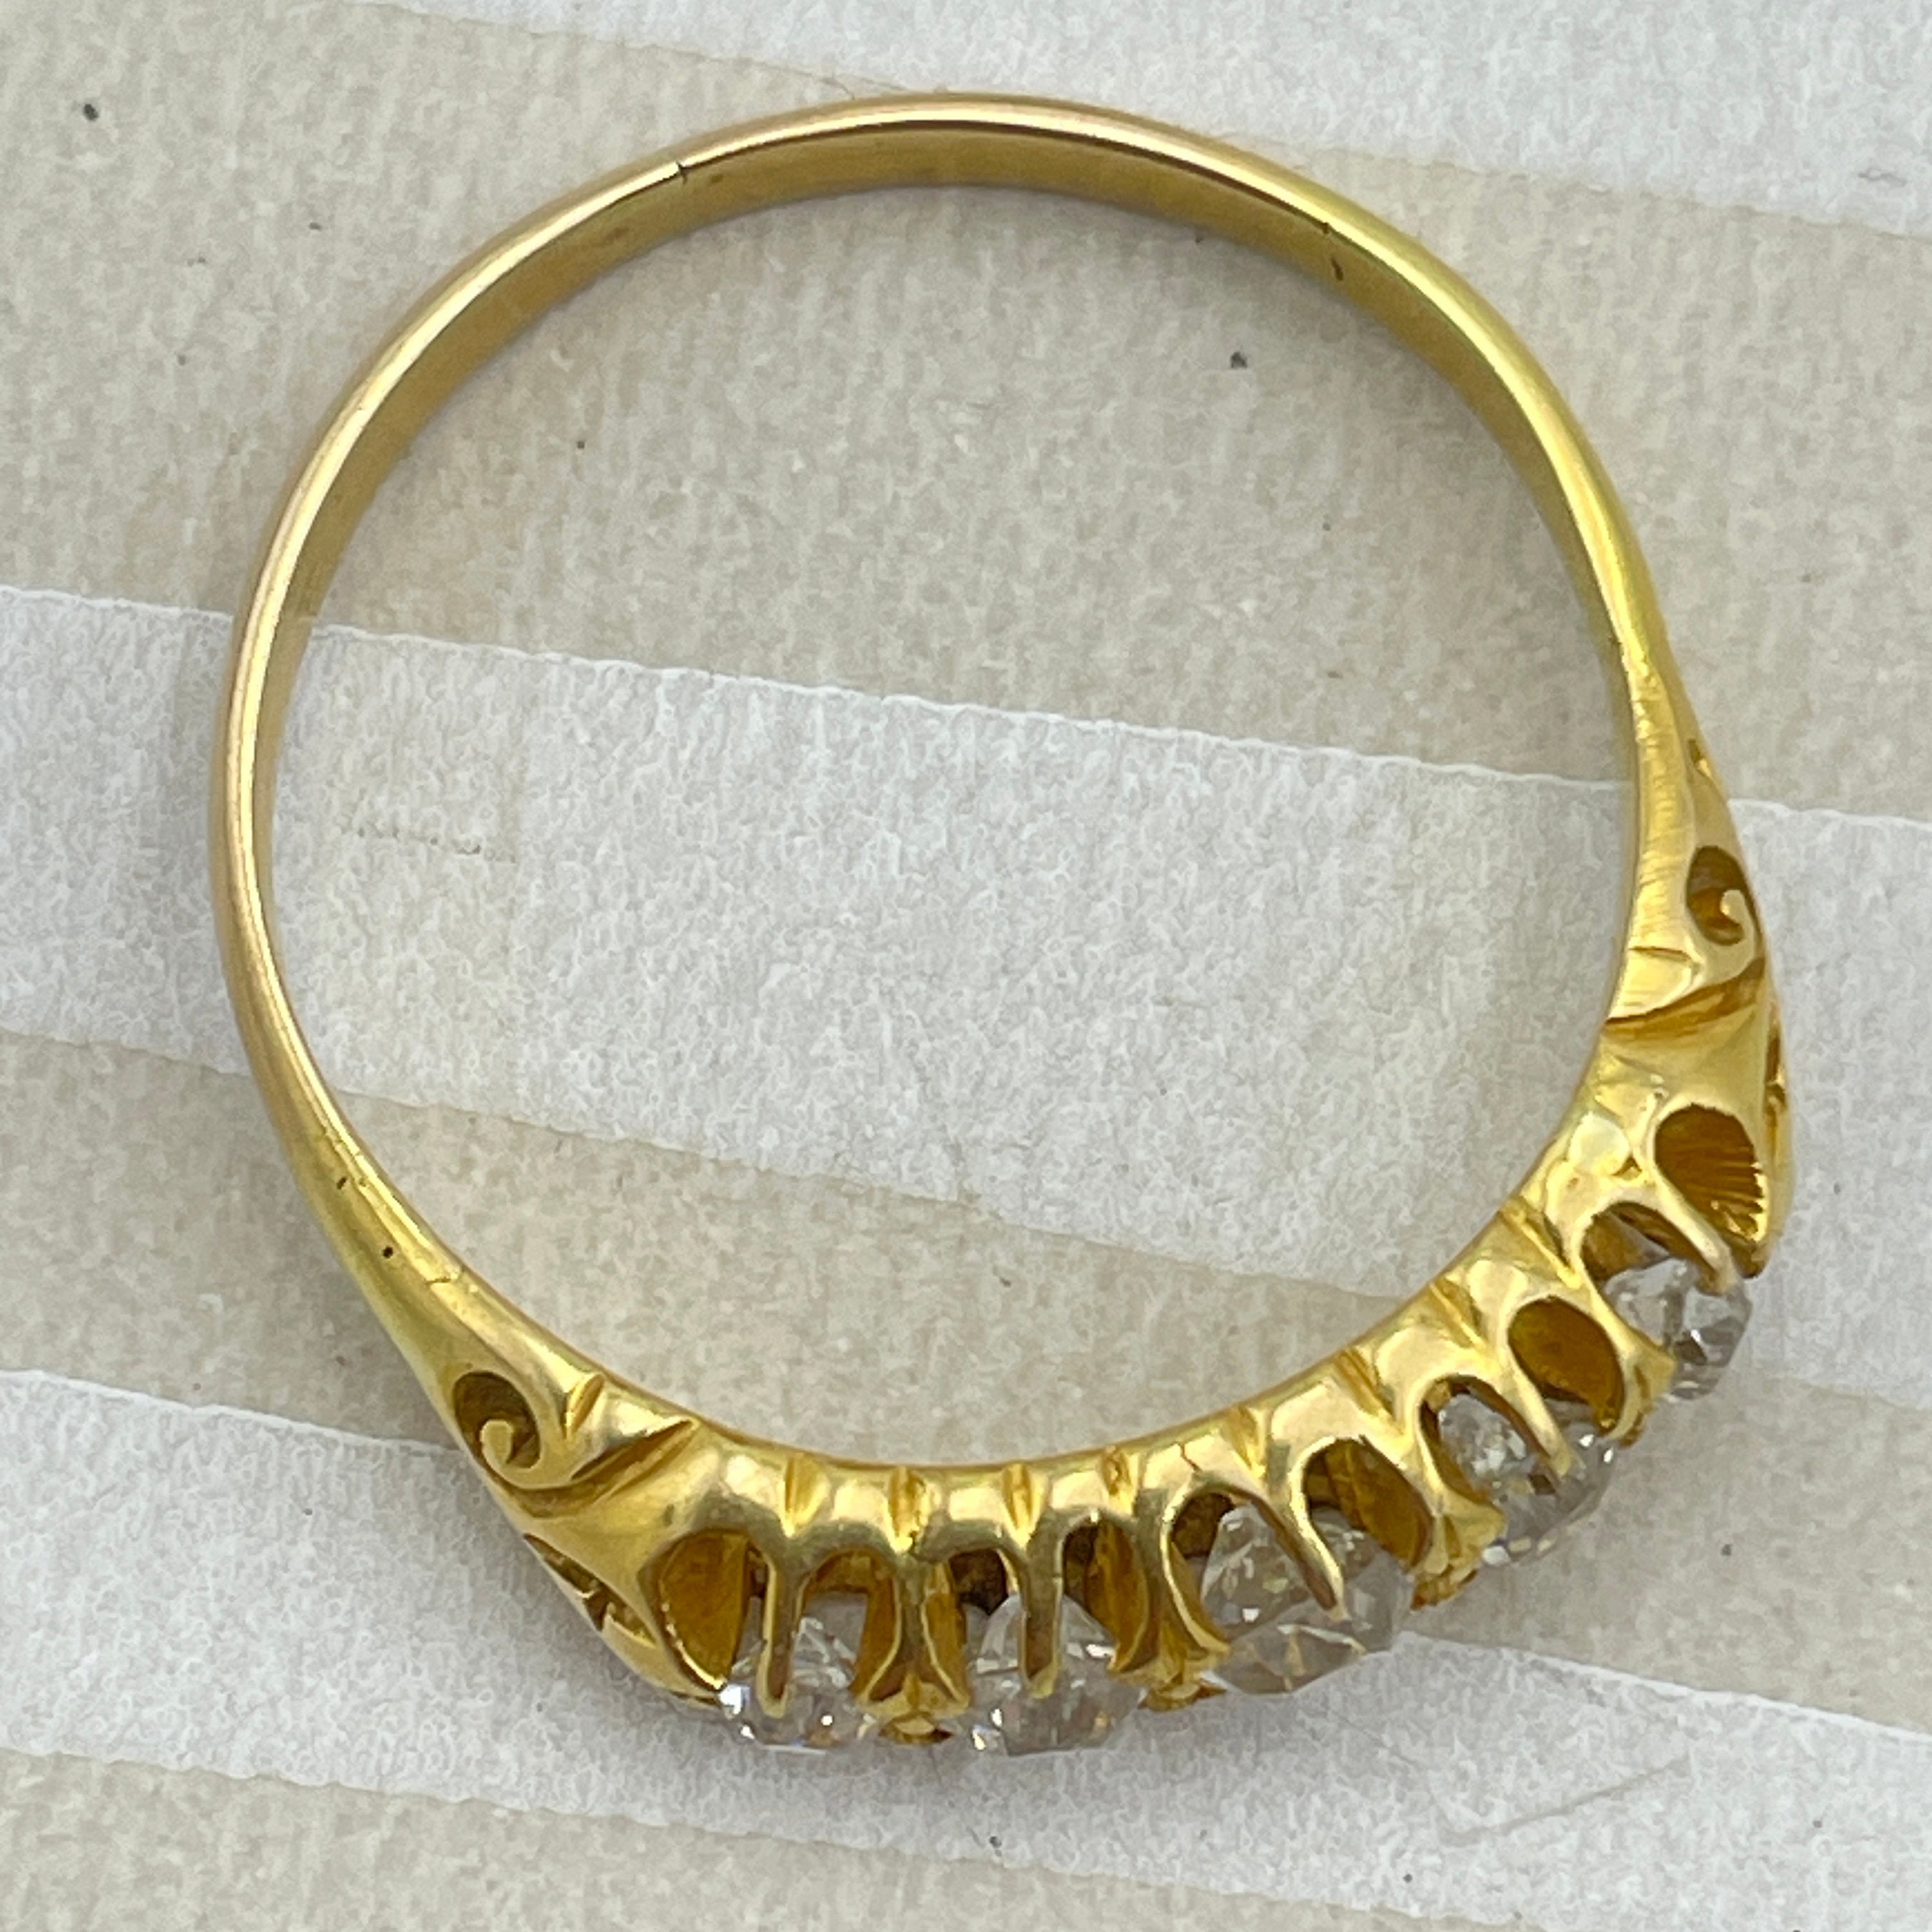 Victorian, 18ct Gold, Old Mine Cut Diamond, Five Stone Ring